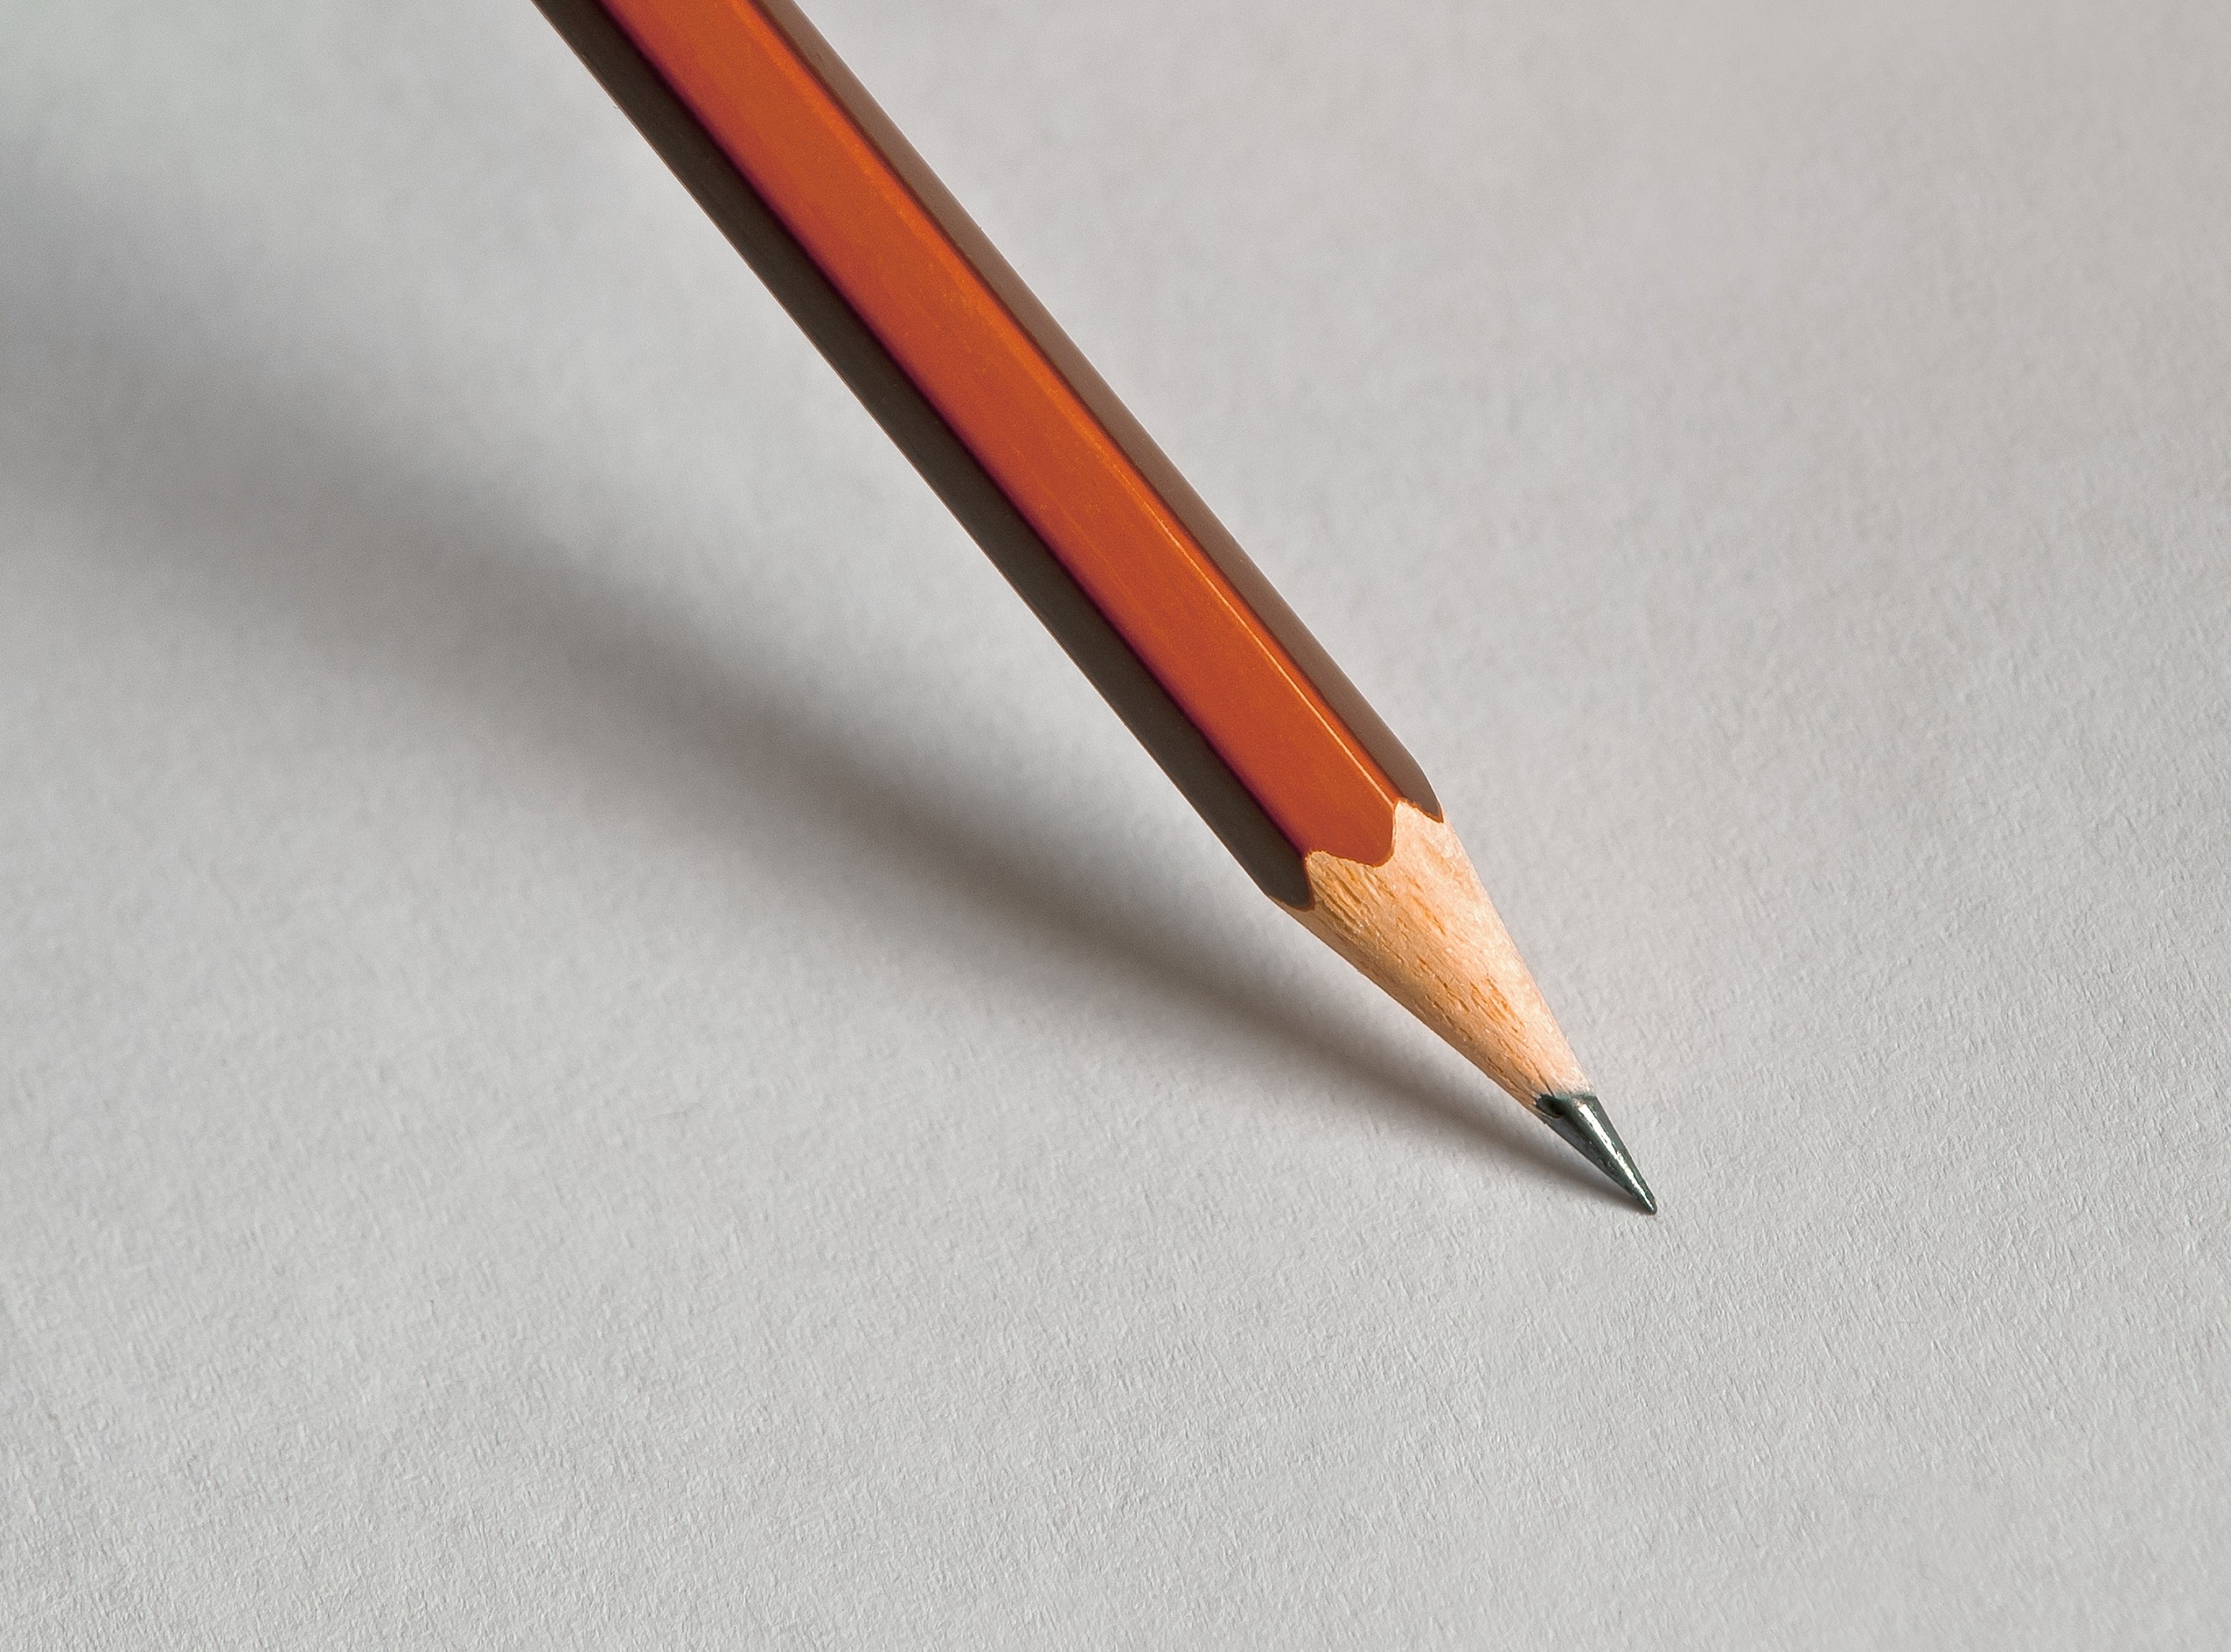 sharpened pencil